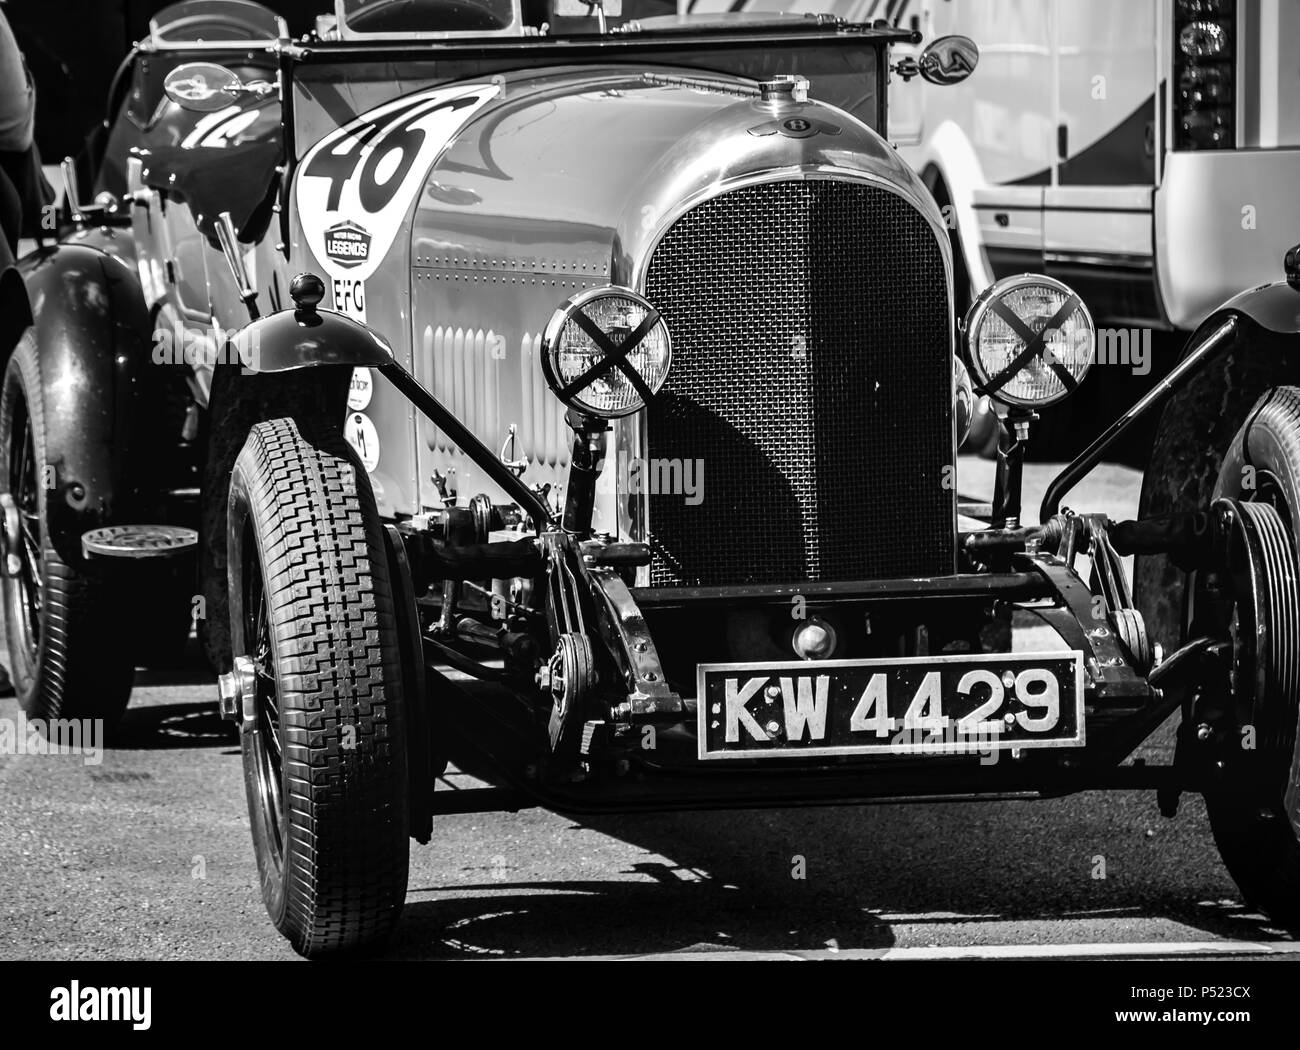 A vintage racing car. Stock Photo